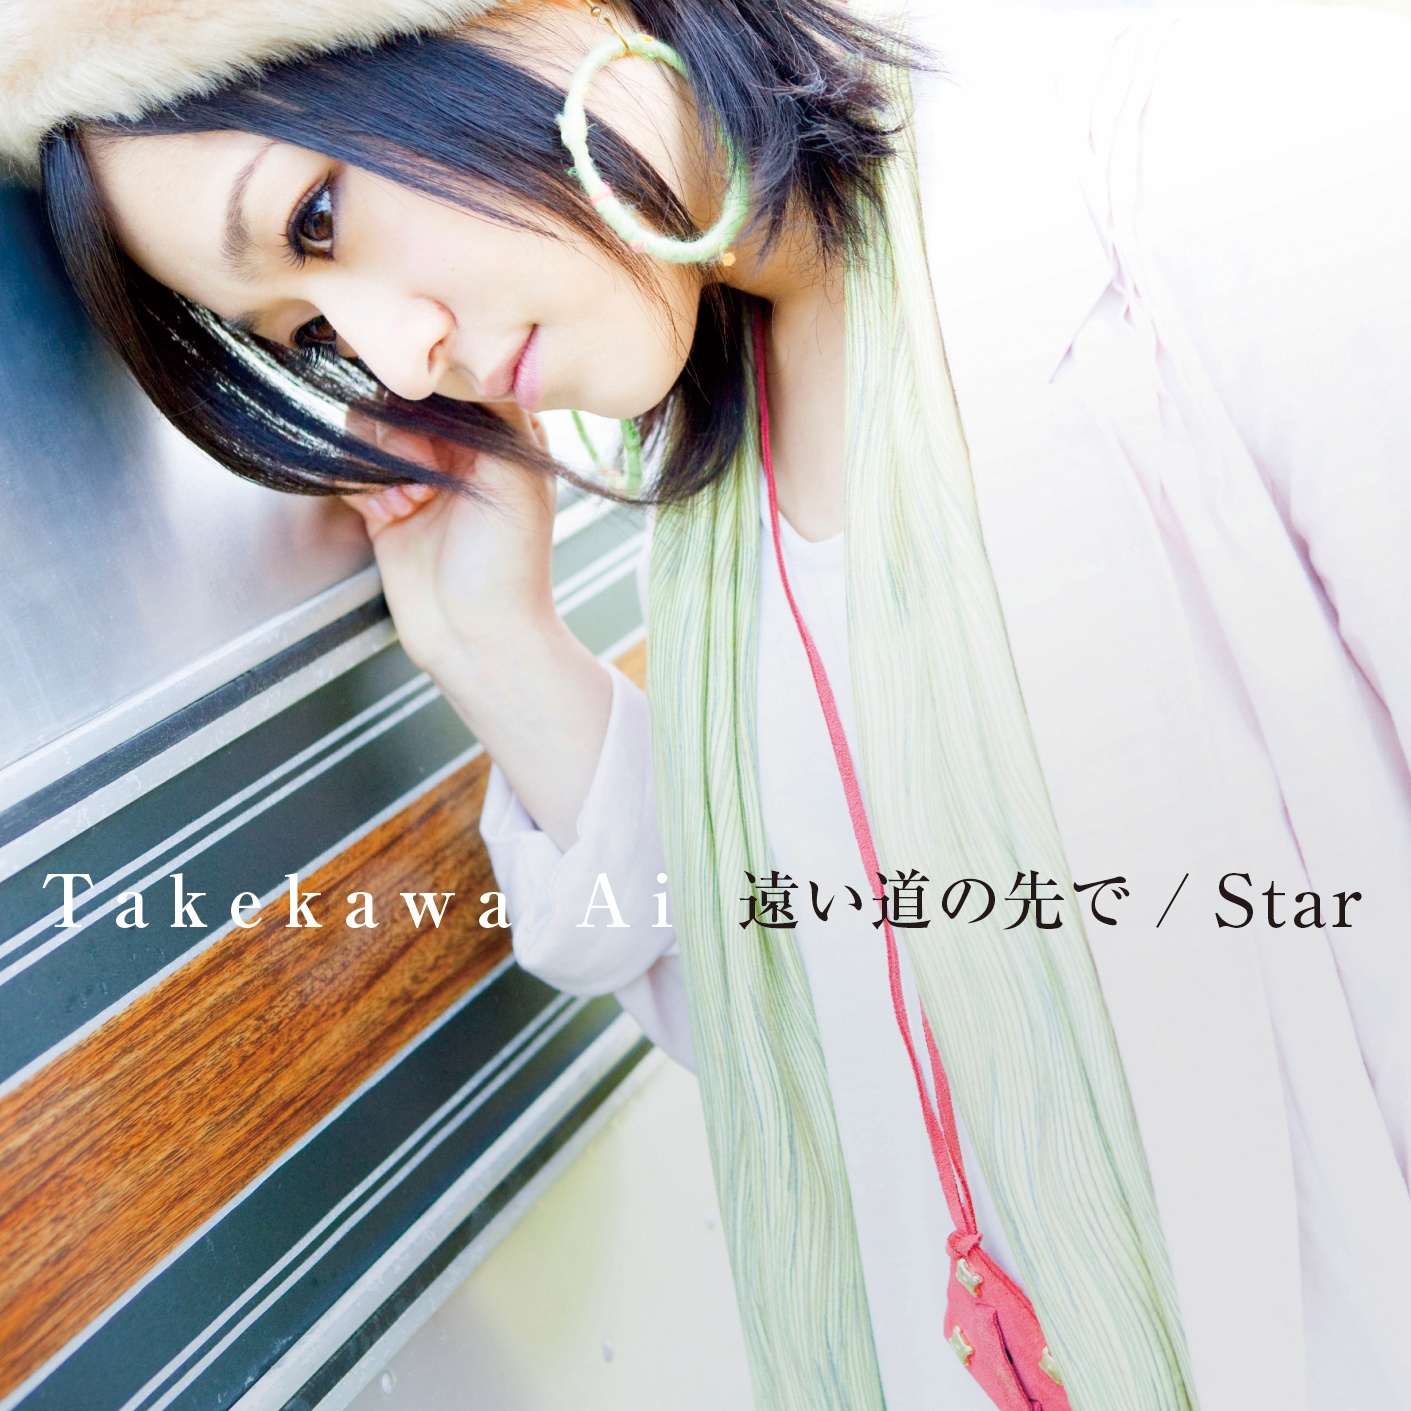 Star (instrumental)